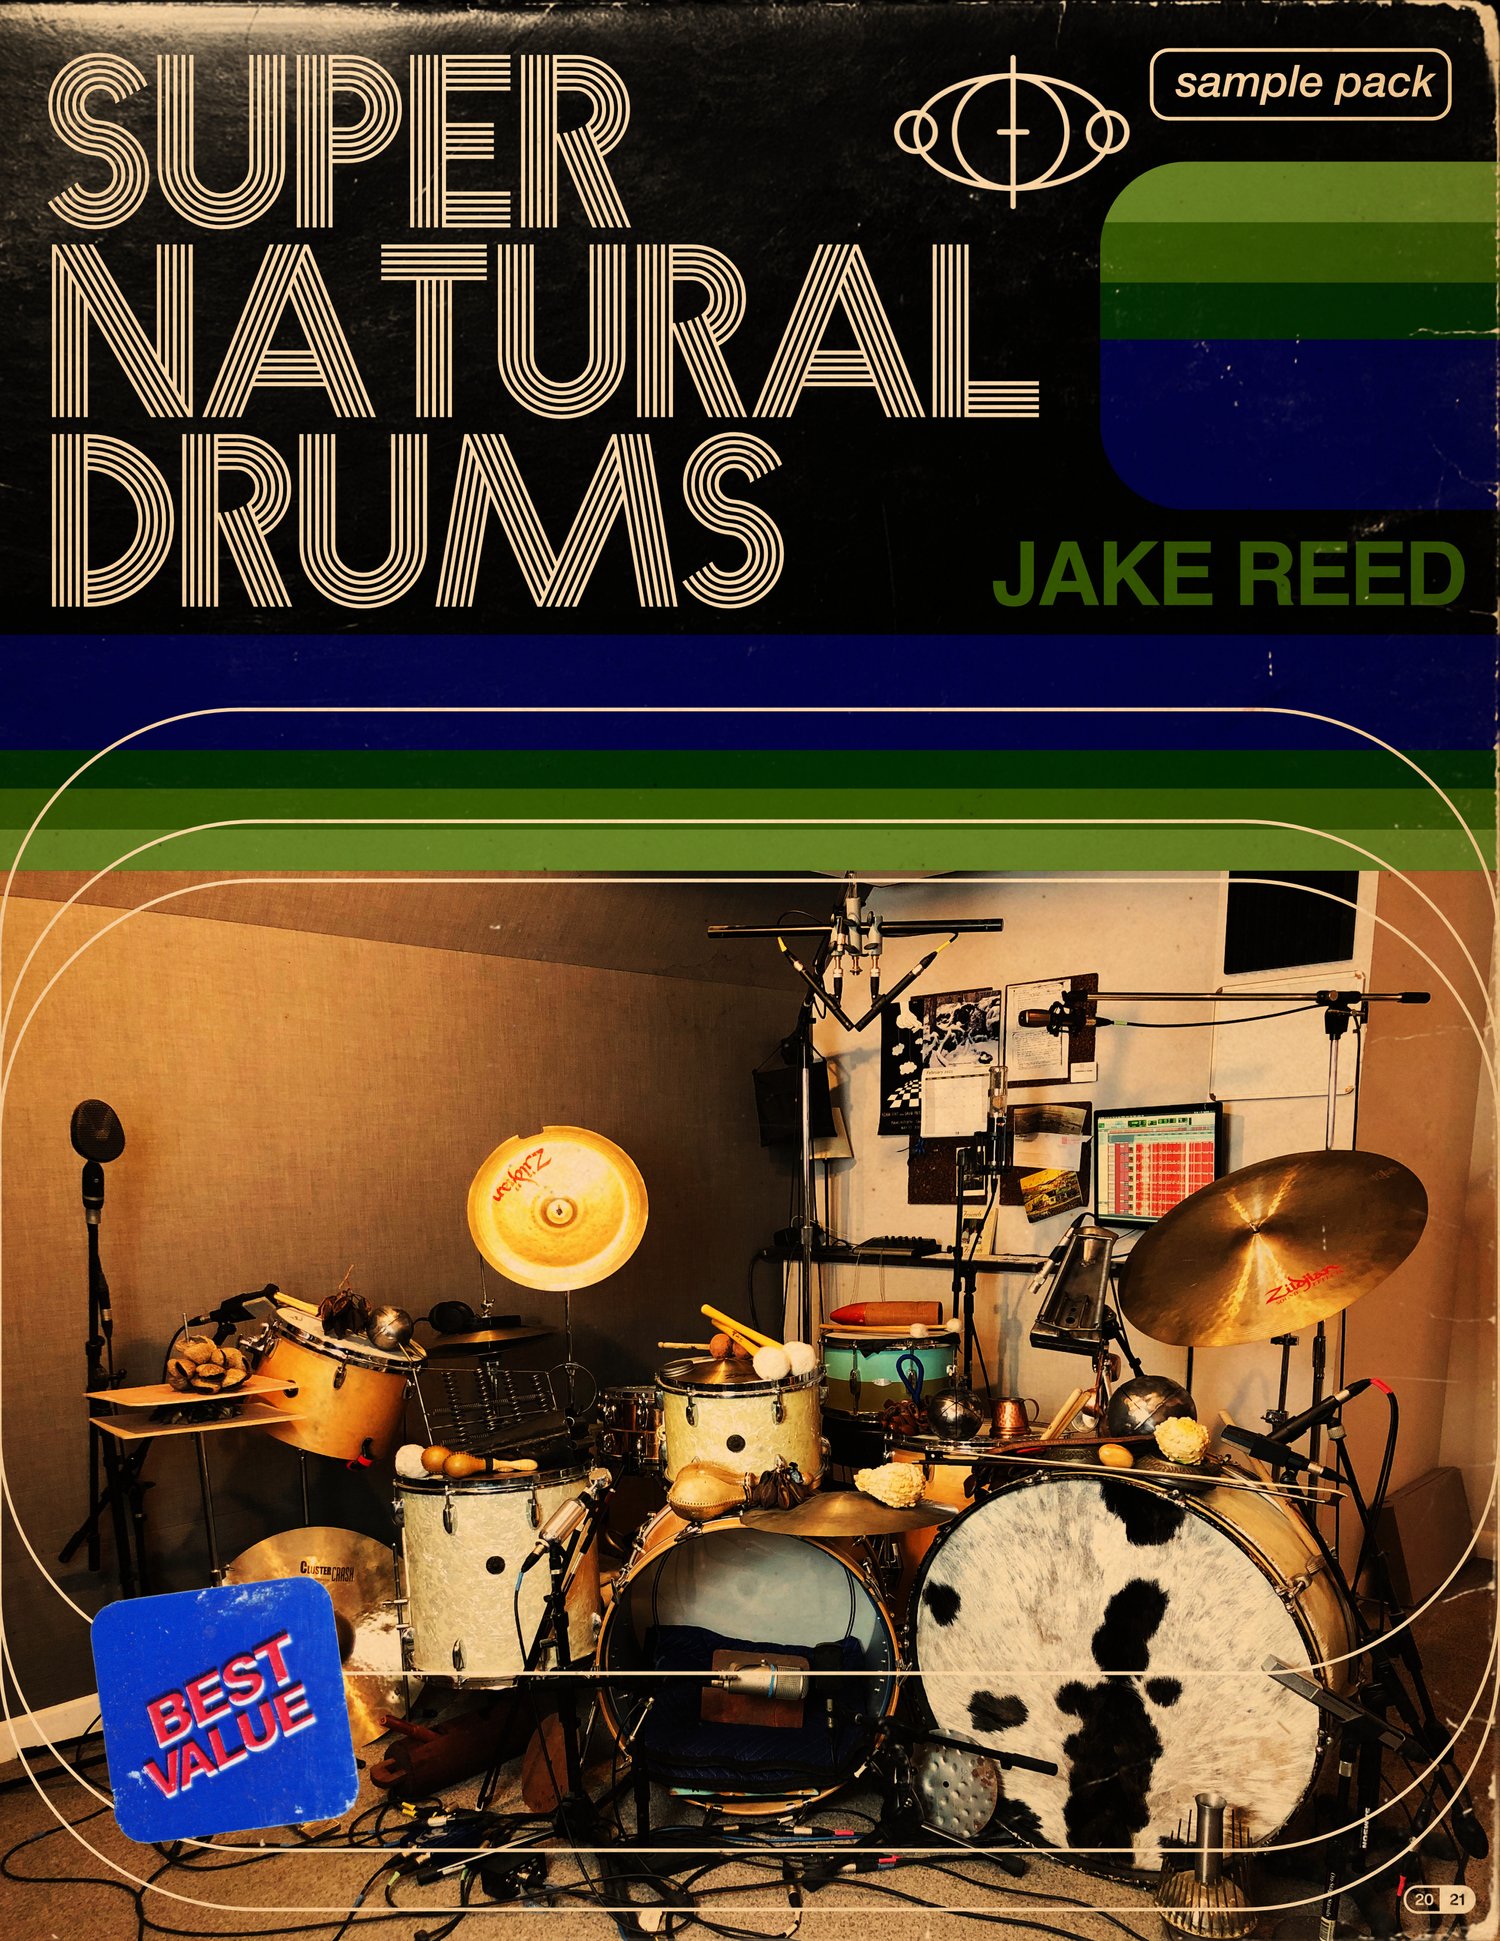 Drum sample downloads